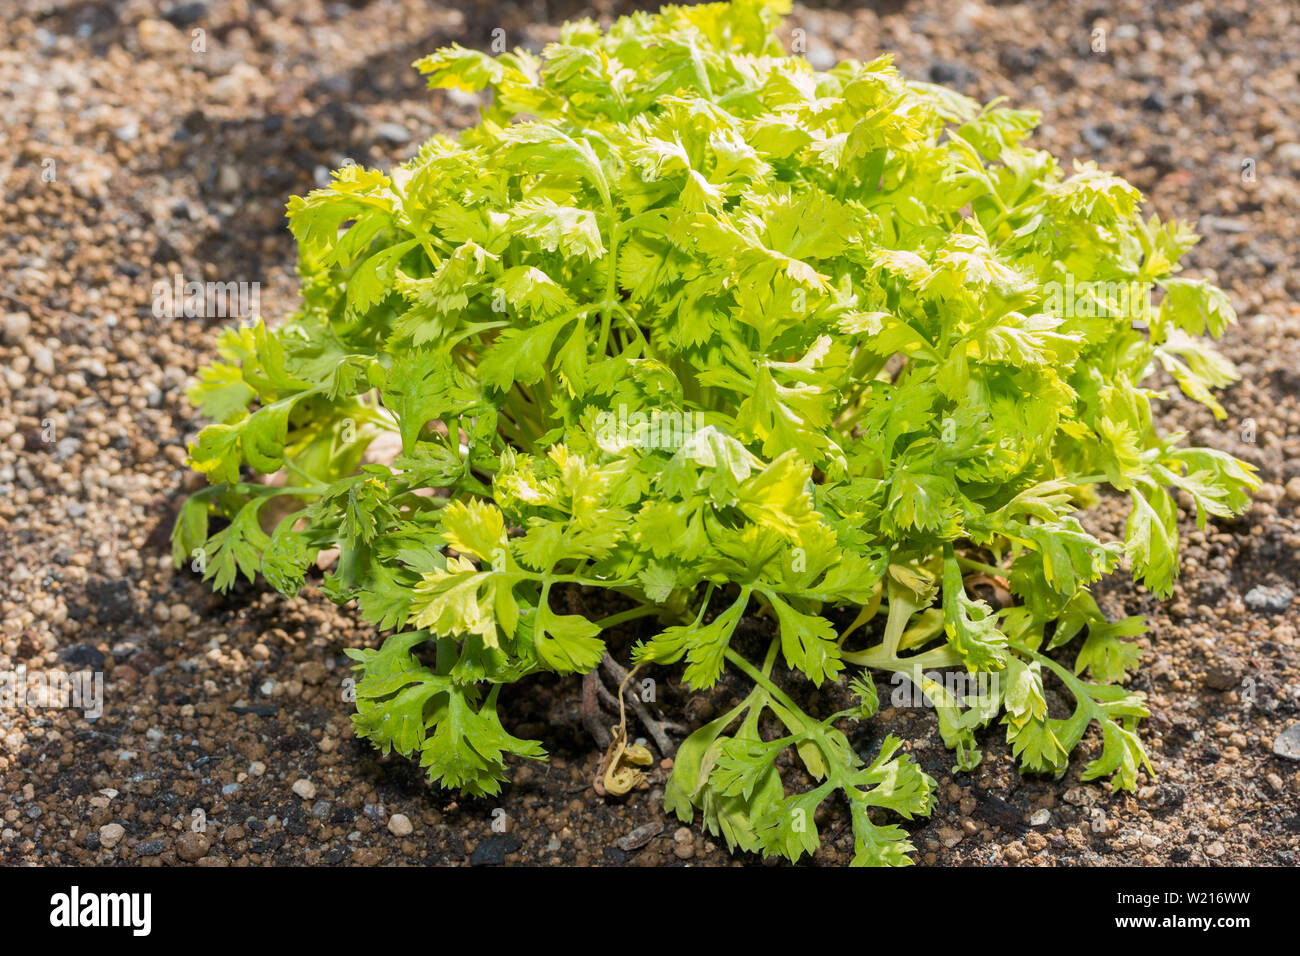 Bush of Tanacetum parthenium leaves lush in a garden. Stock Photo